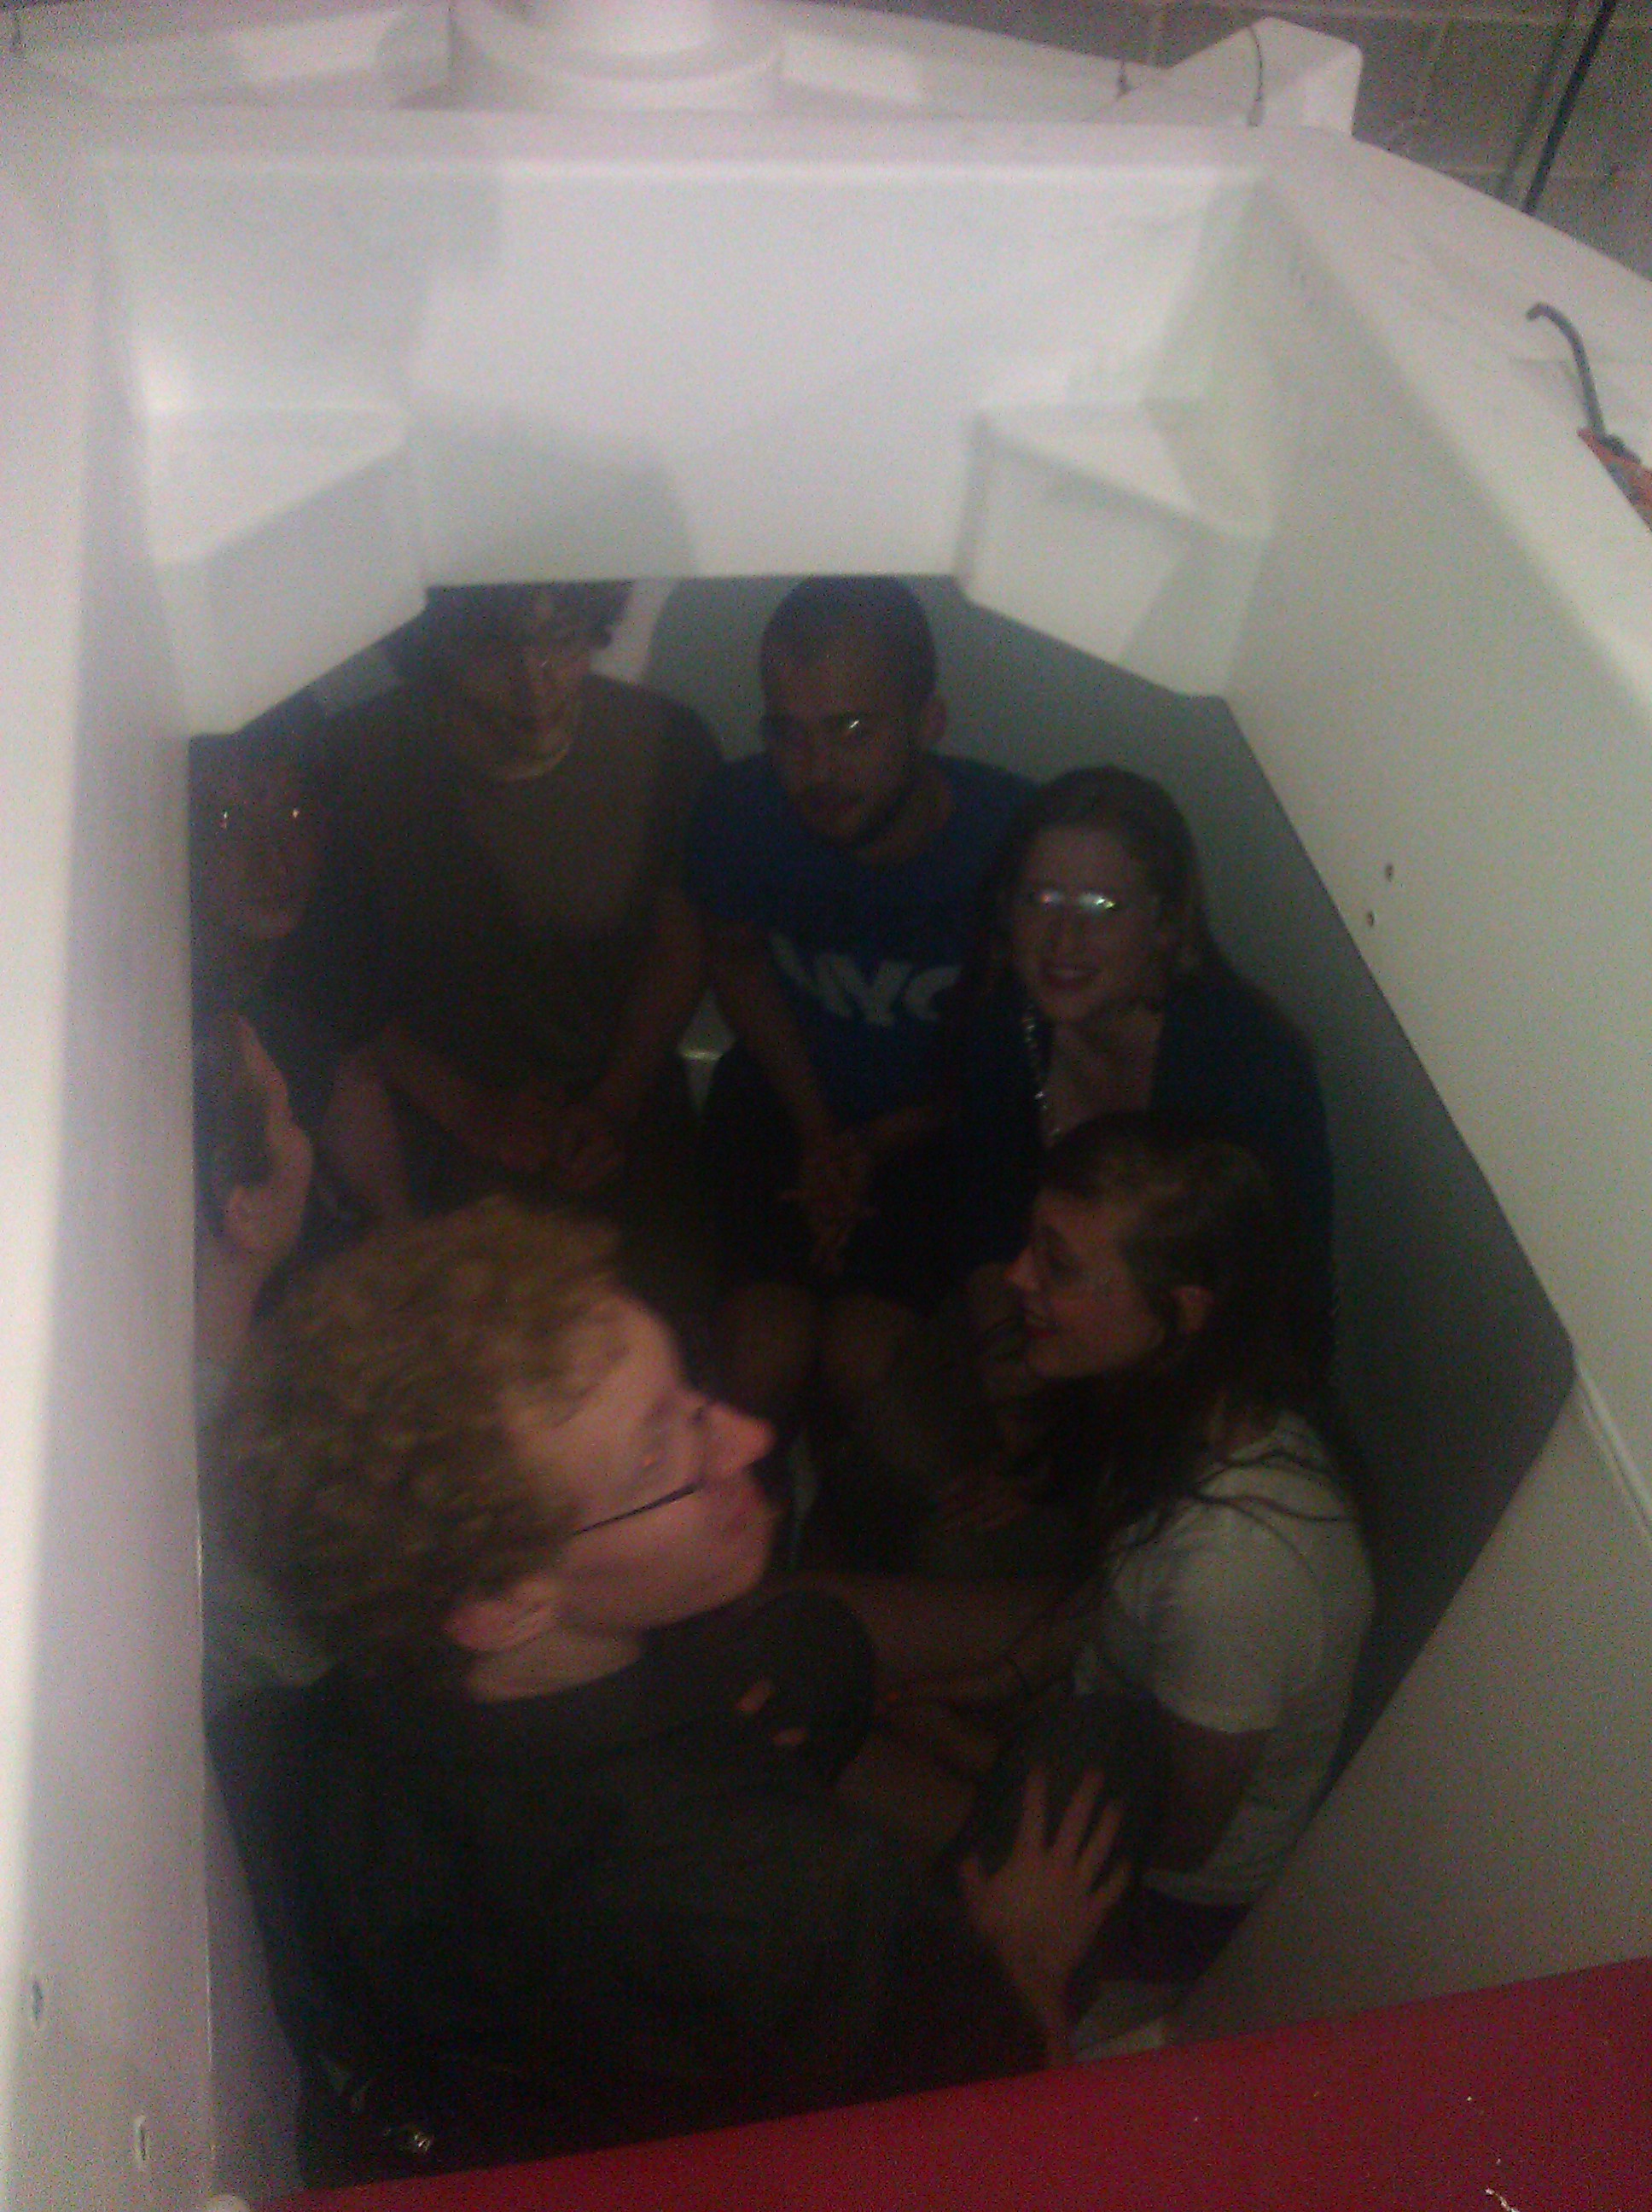 8 UC students inside Shelter, 8 College Students inside shelter